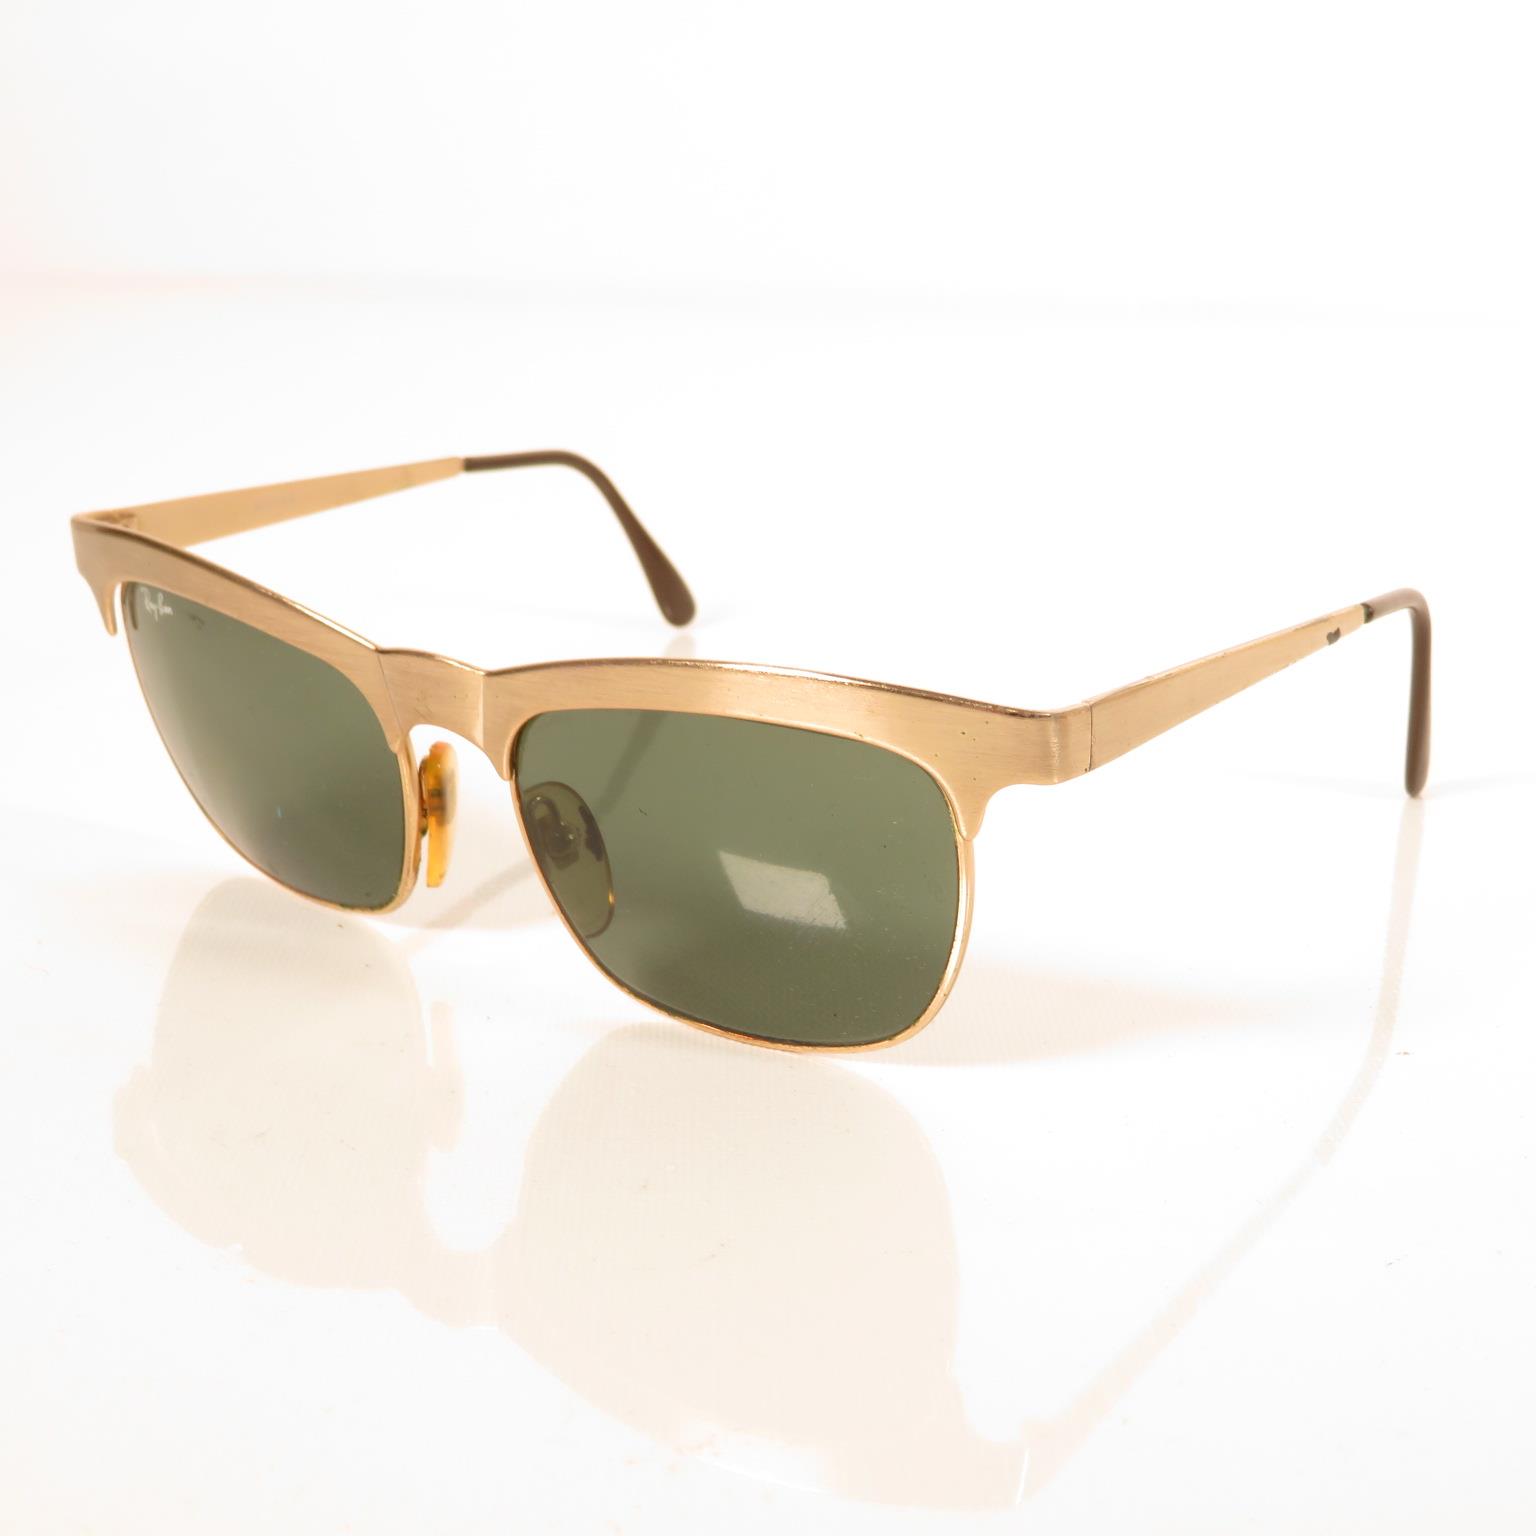 5x pairs Ray Ban sunglasses - - Image 12 of 24